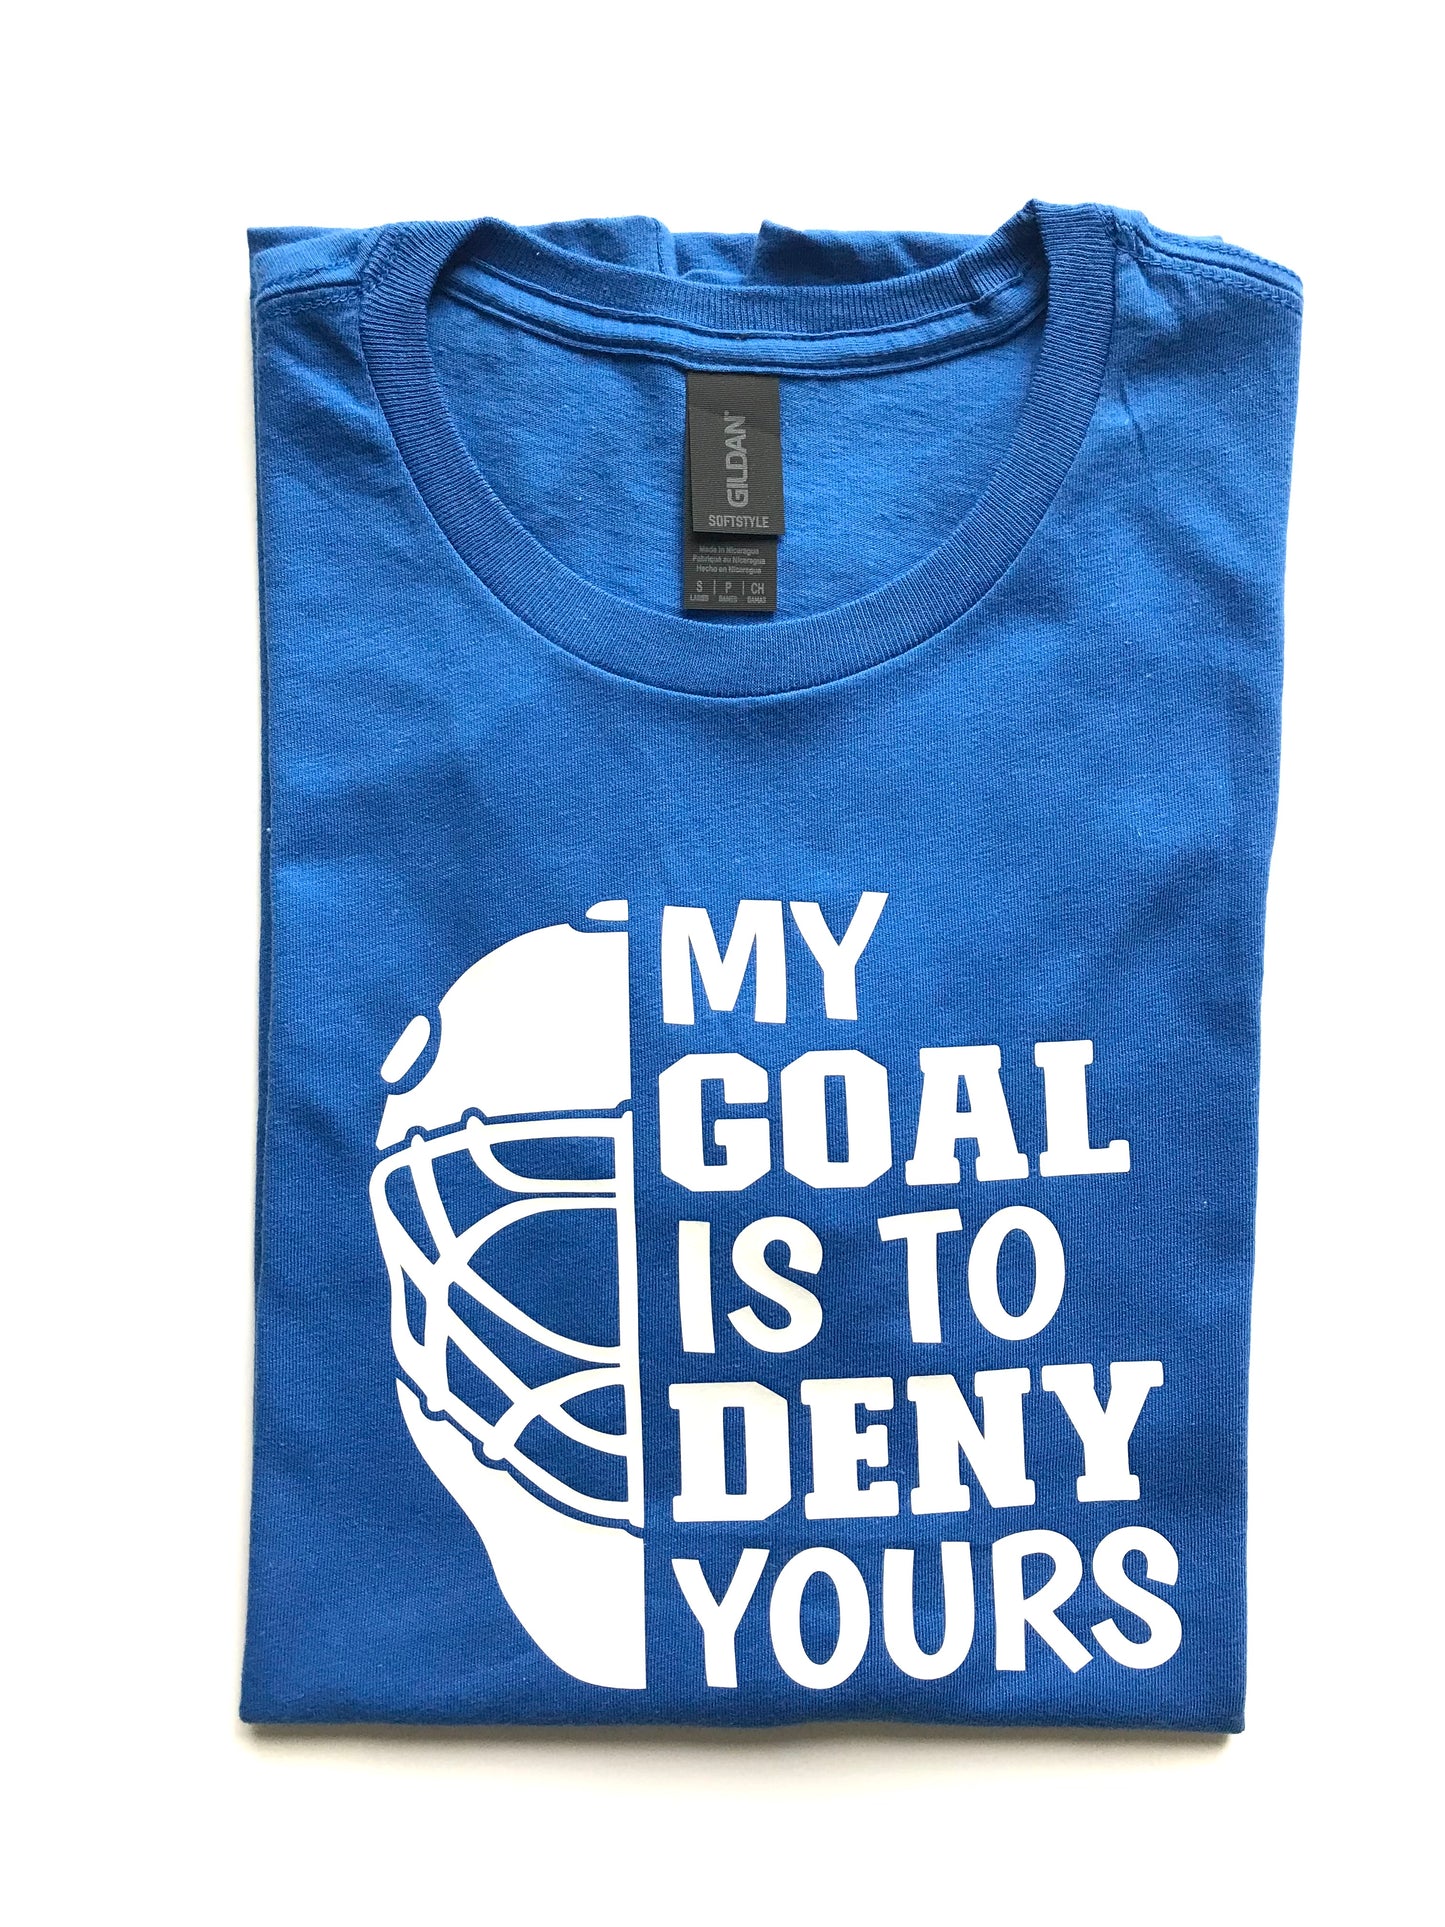 Hockey Quote T-shirts